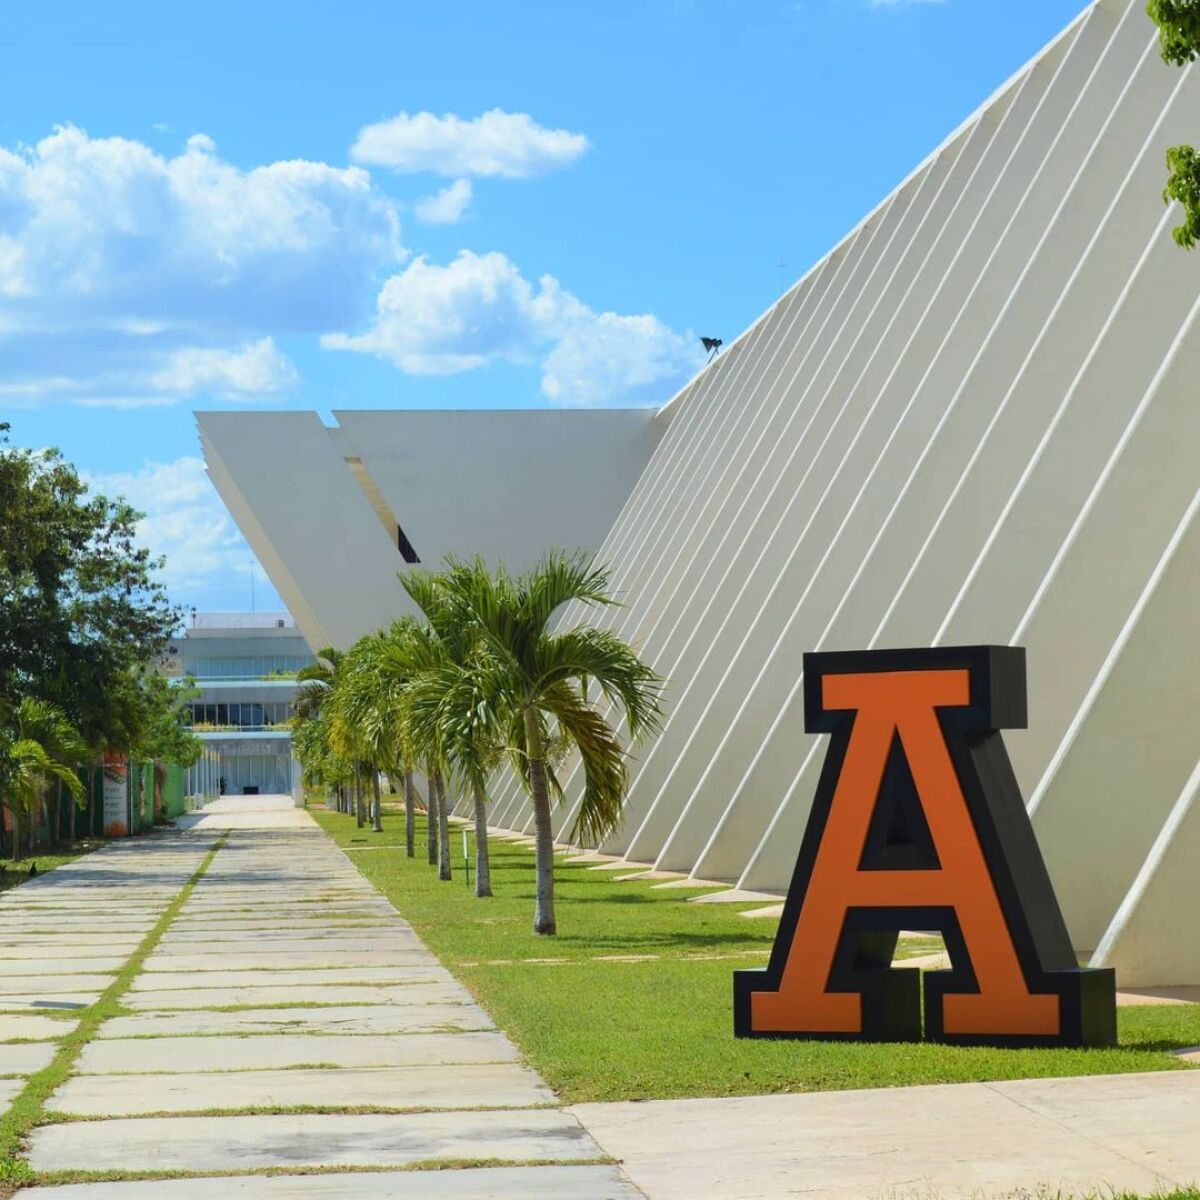 Universidad Anáhuac Mayab